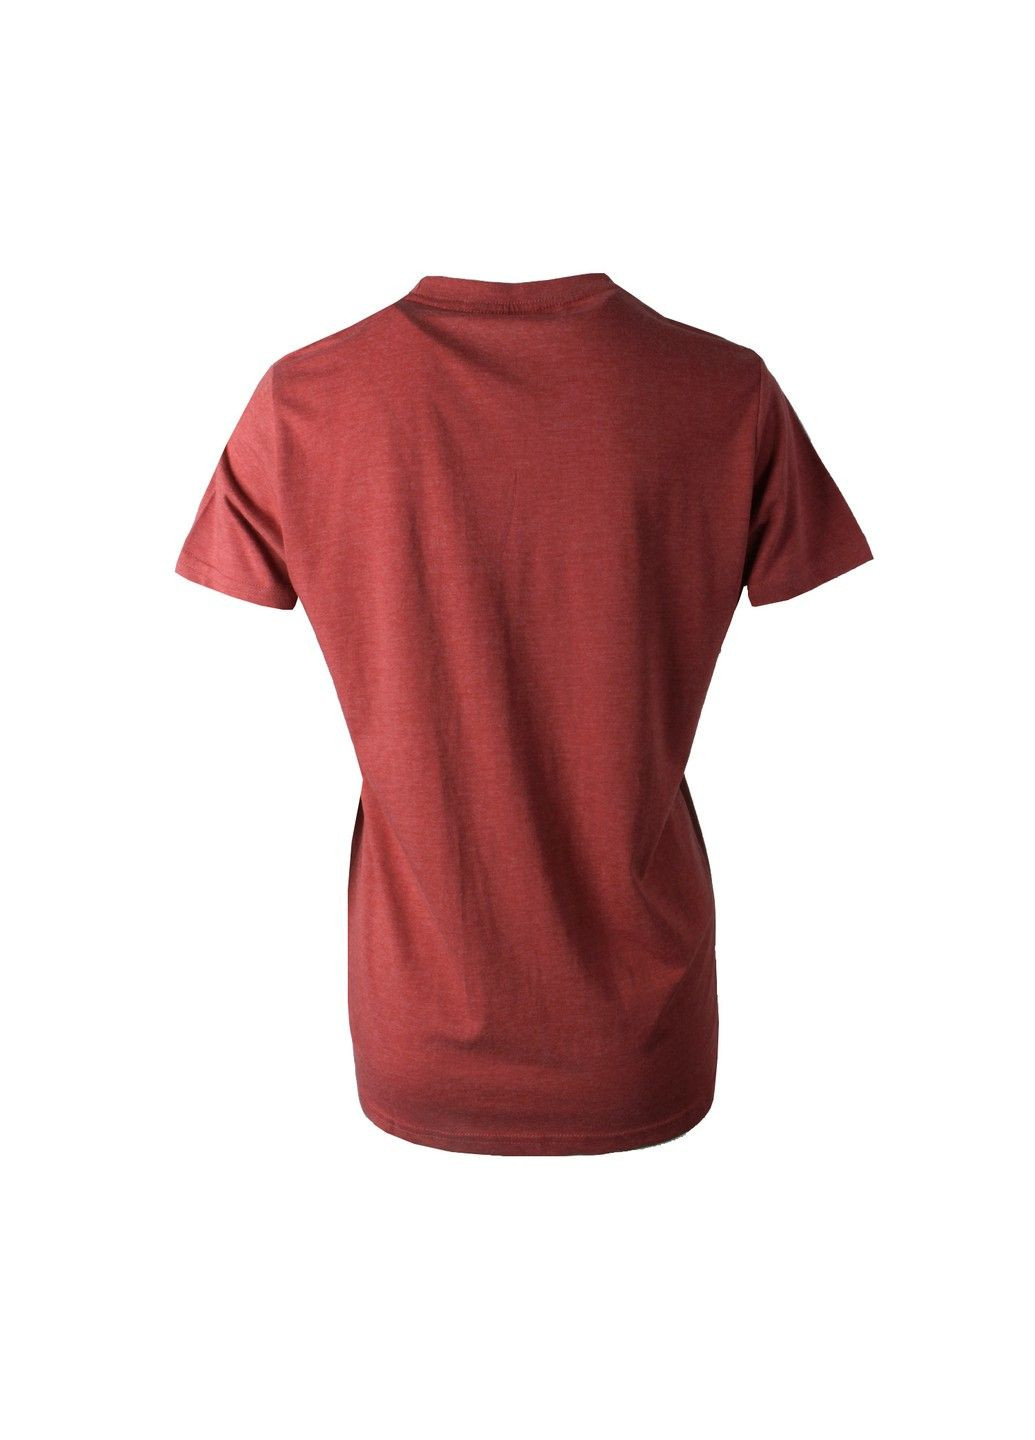 Красная женская футболка Fine Look